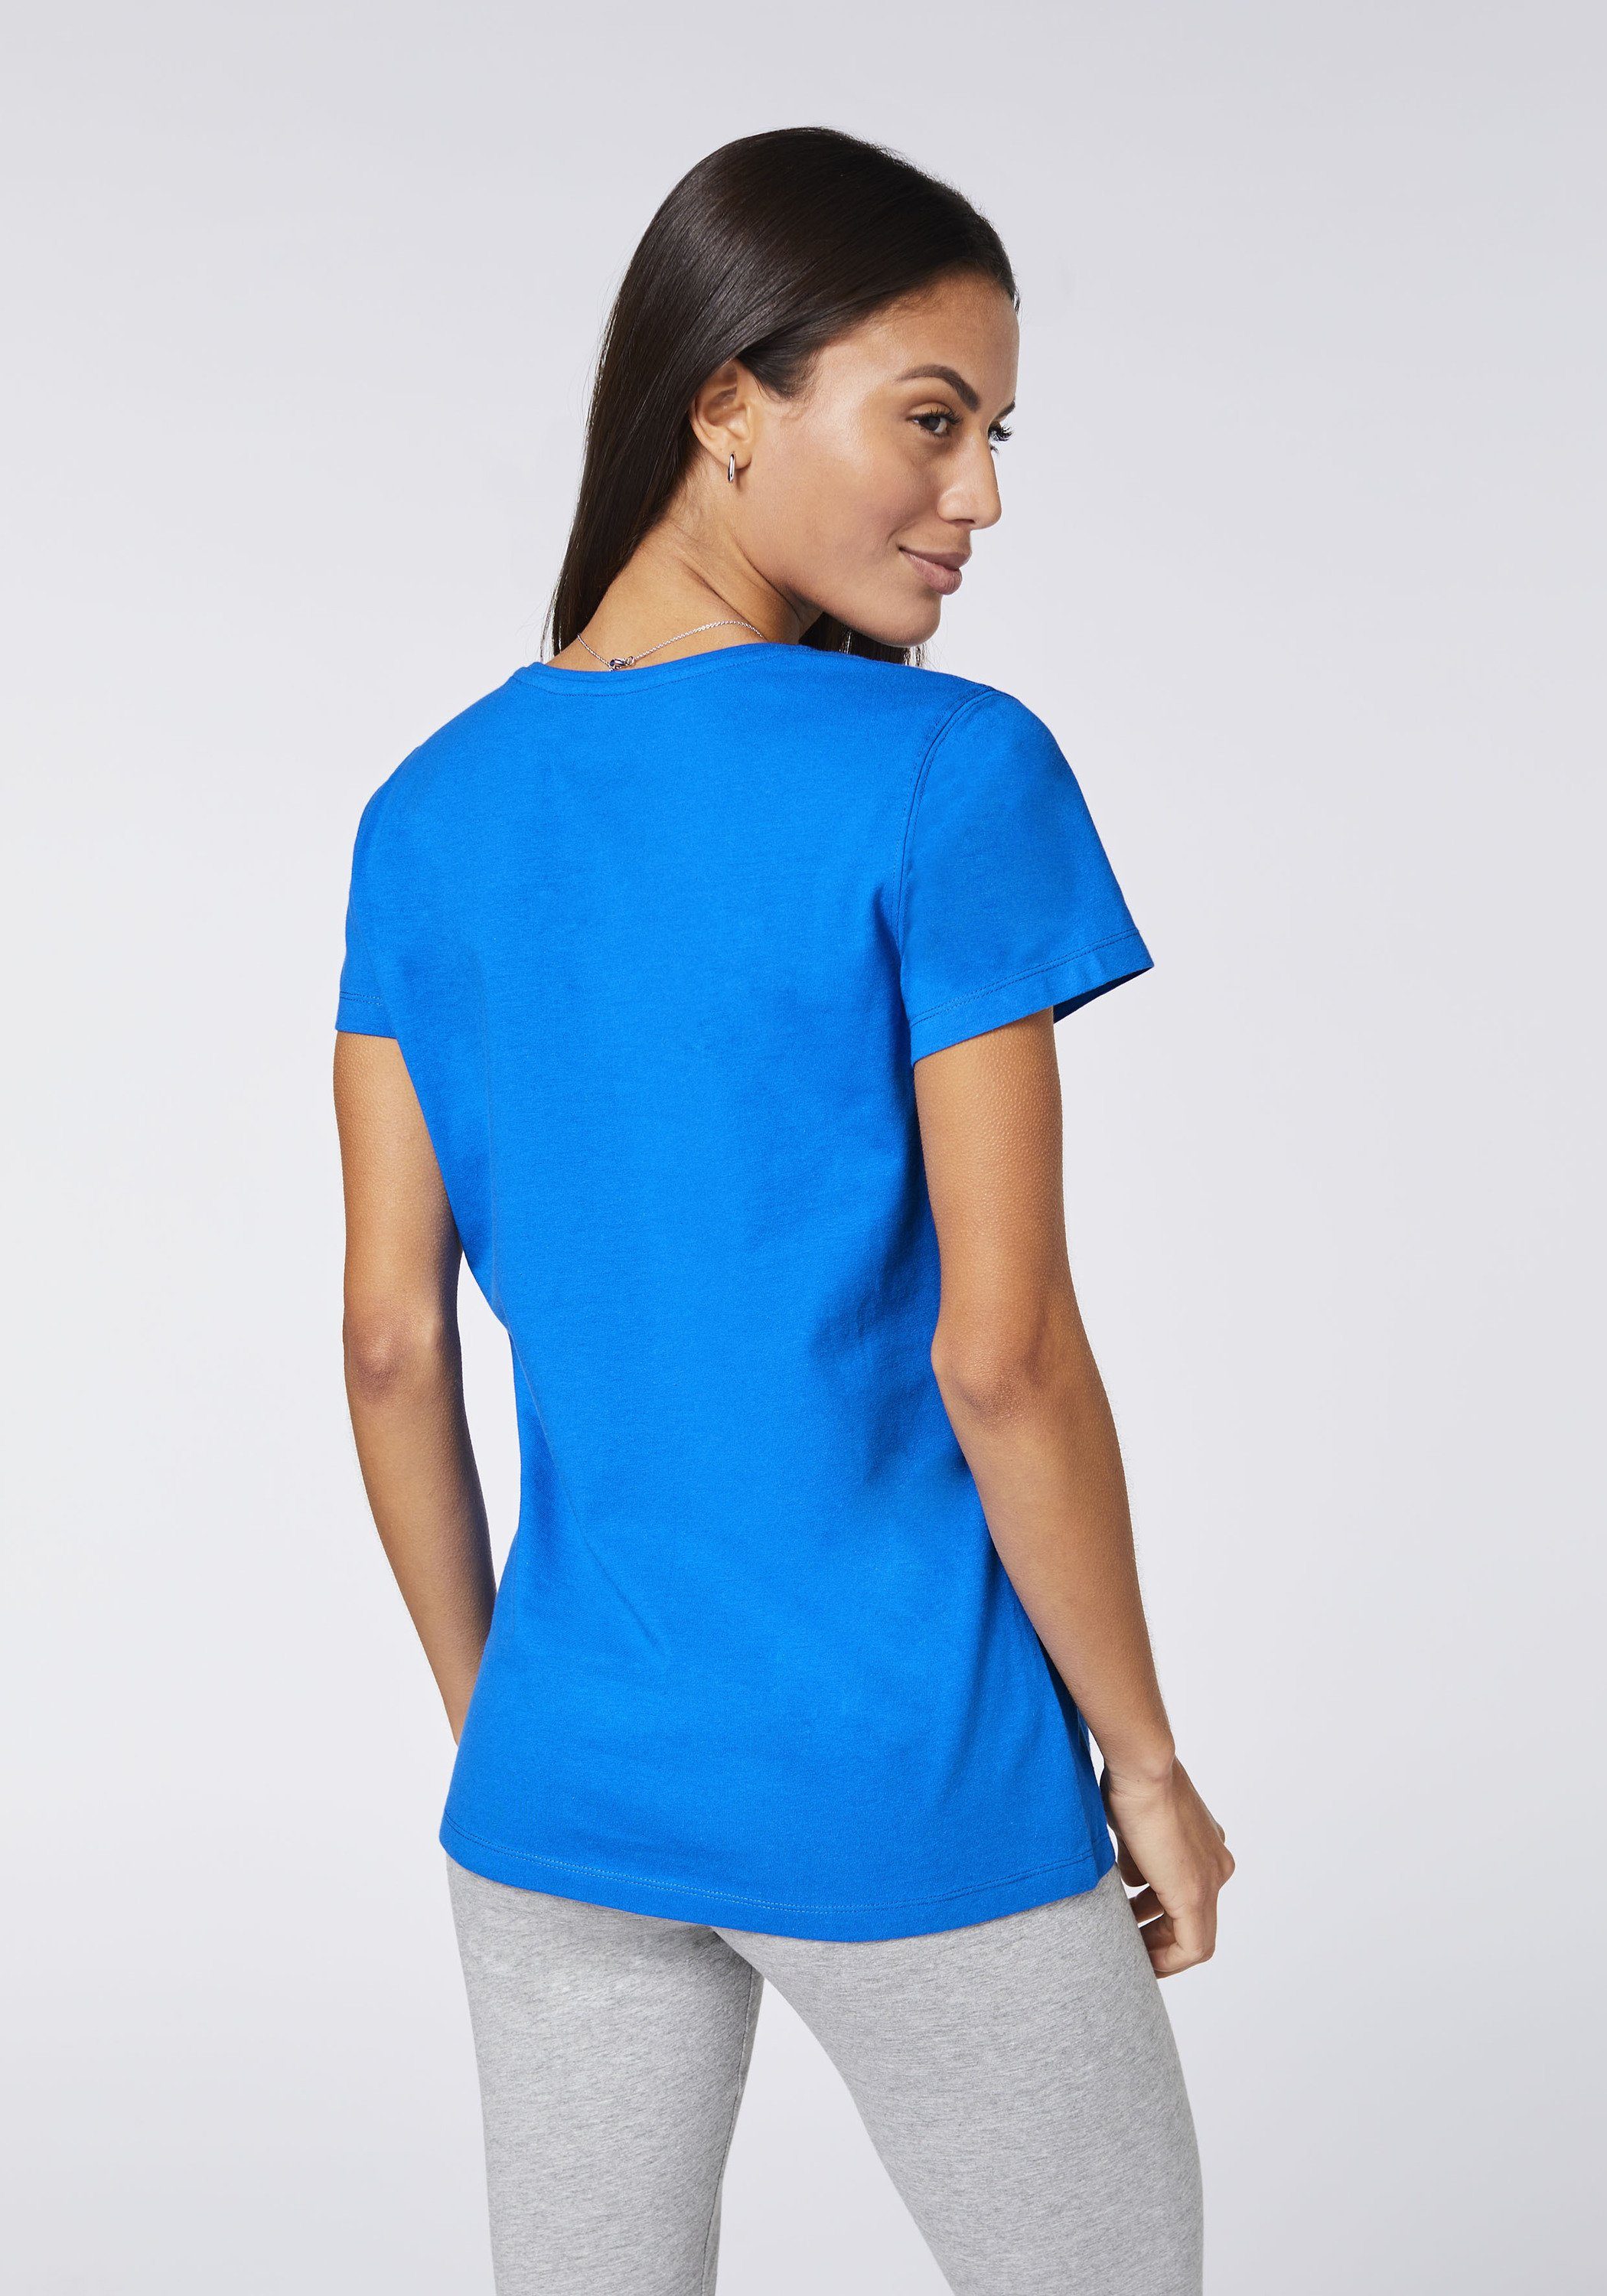 SPORT 19-4150 Princess mit Print-Shirt Logo-Pigment-Print Blue JETTE